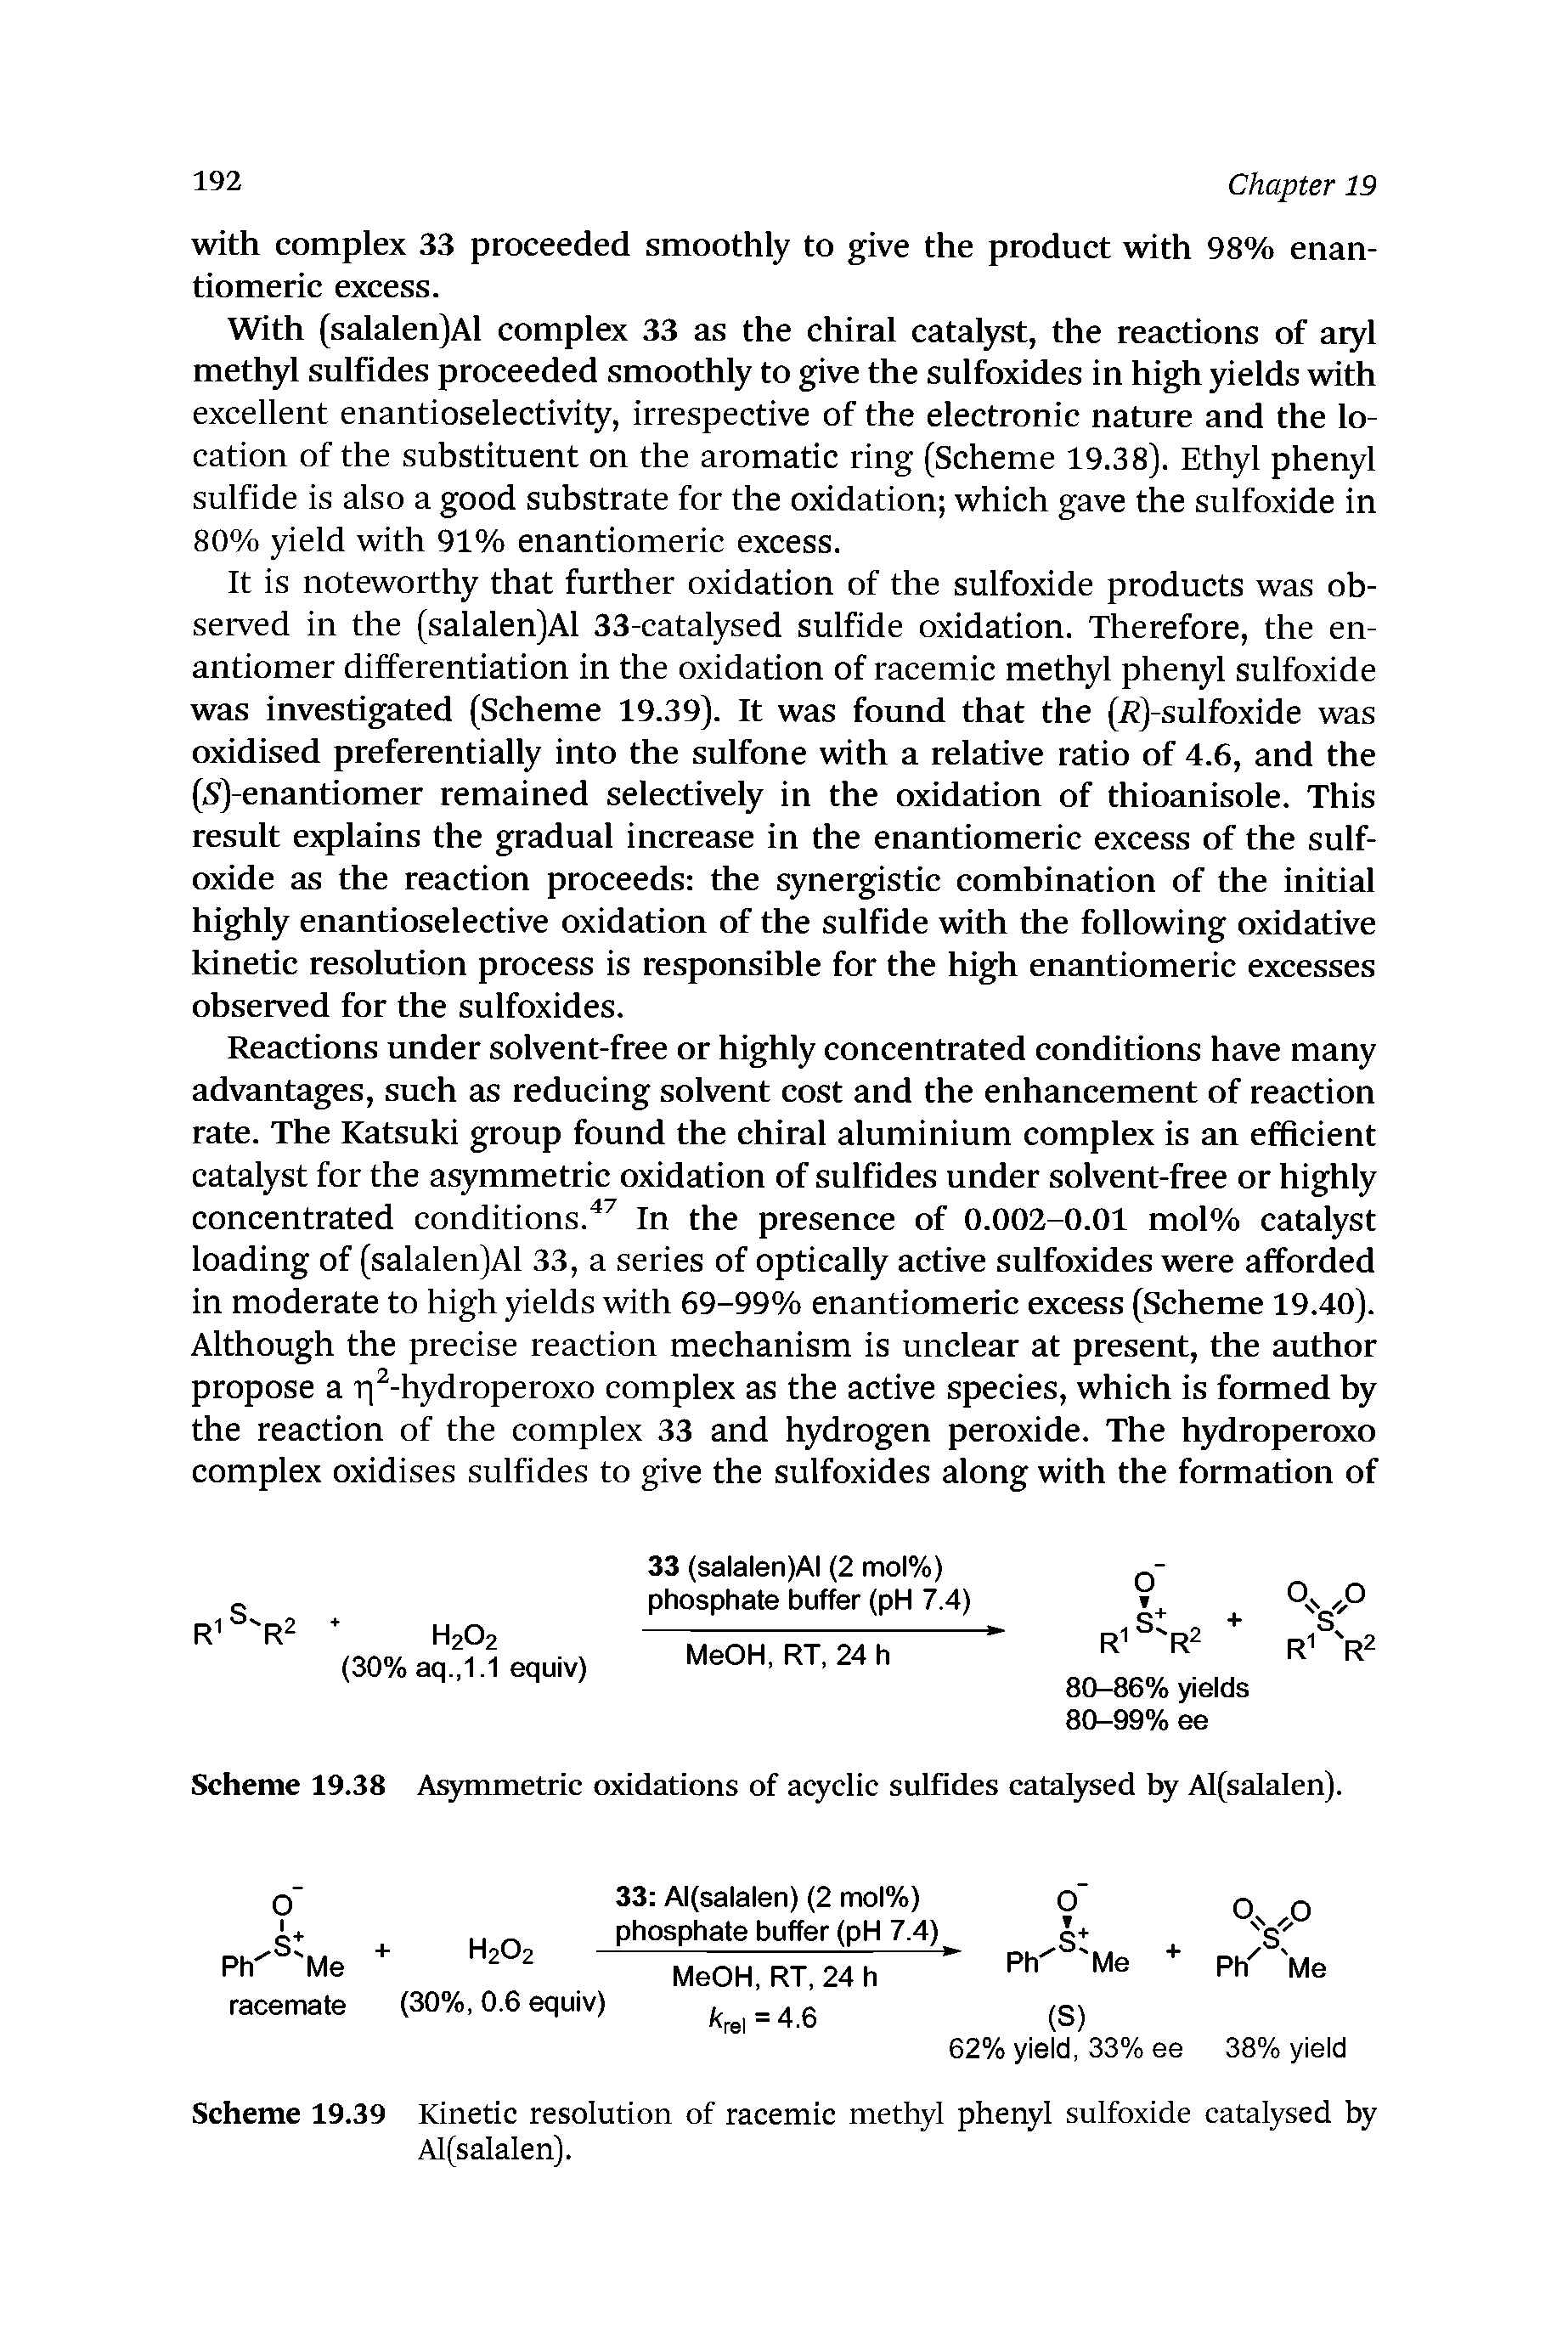 Scheme 19.39 Kinetic resolution of racemic methyl phenyl sulfoxide catalysed by Al(salalen).